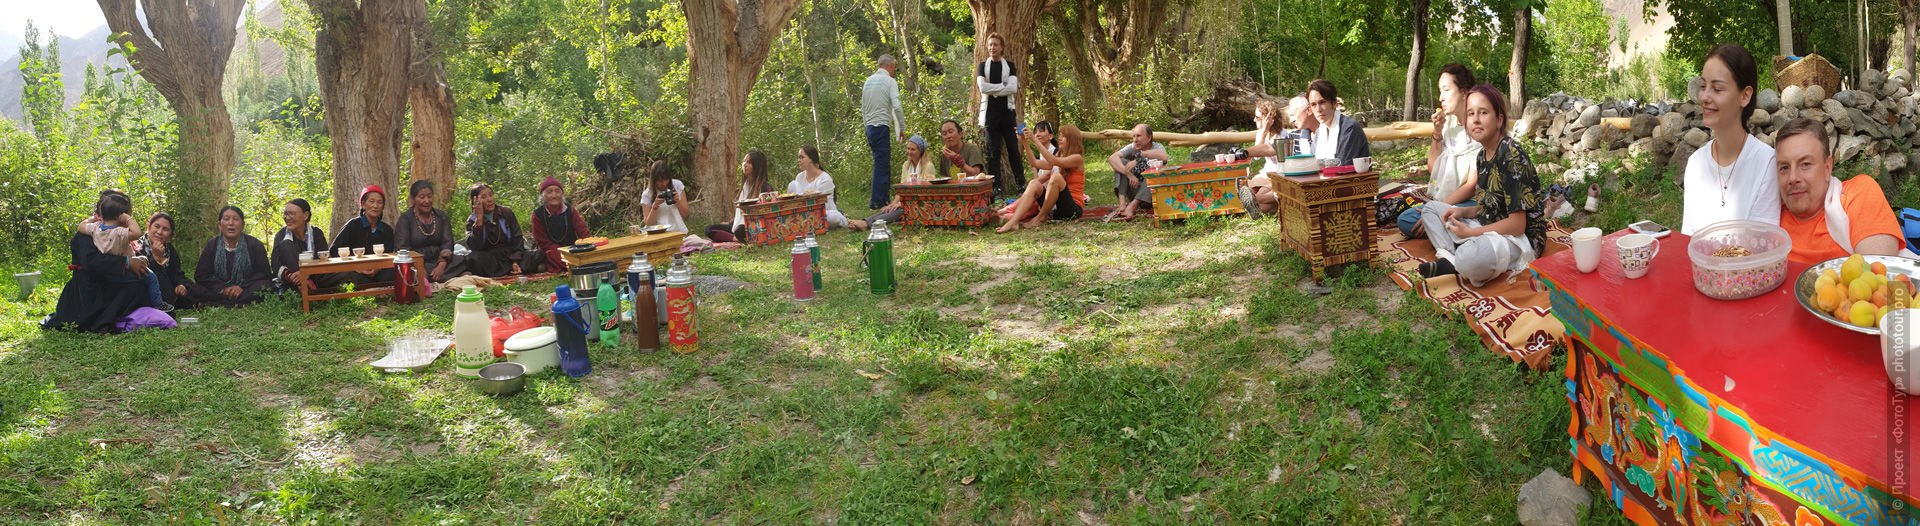 Пикник в деревне Донкар возле реки, Да Хану, Ладакх, Индия.